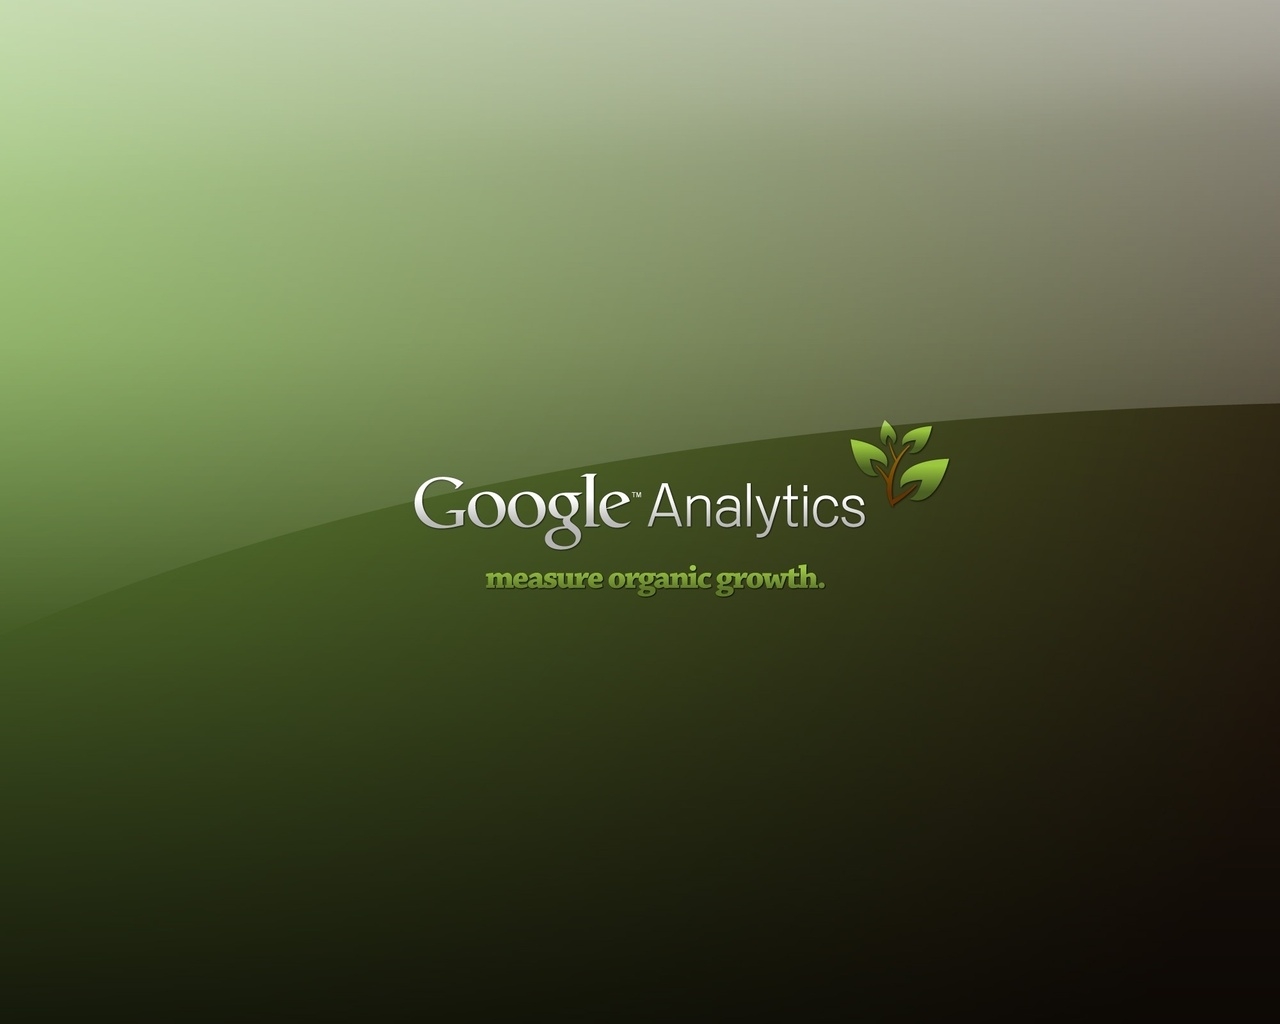 Google Analytics Poster for 1280 x 1024 resolution